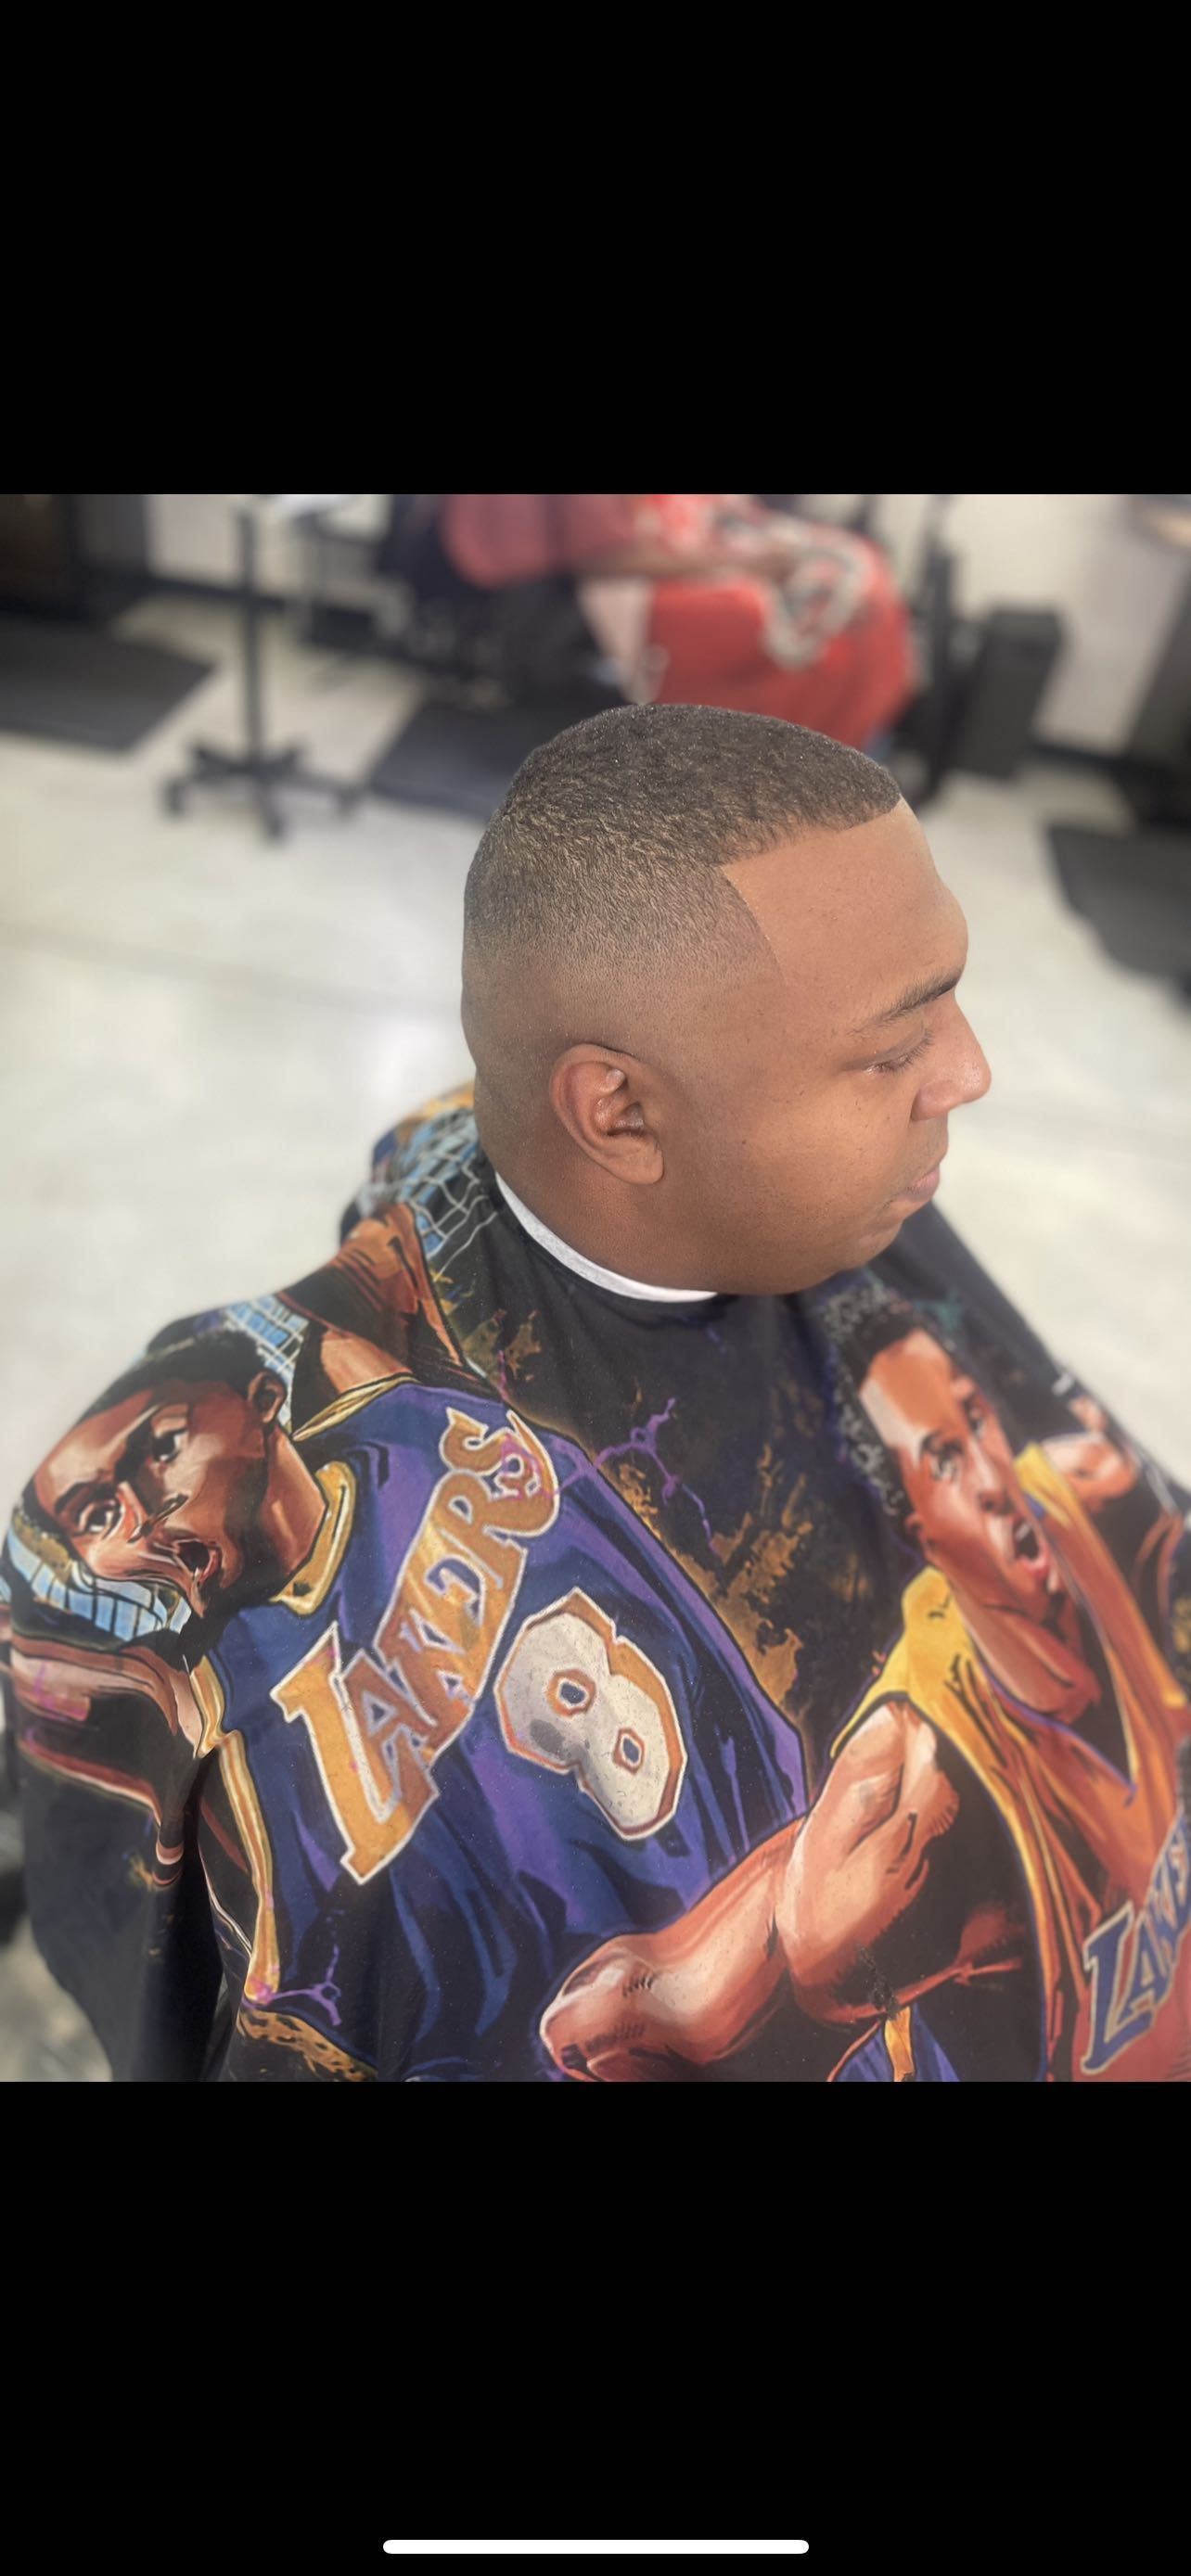 The Man’s Haircut portfolio